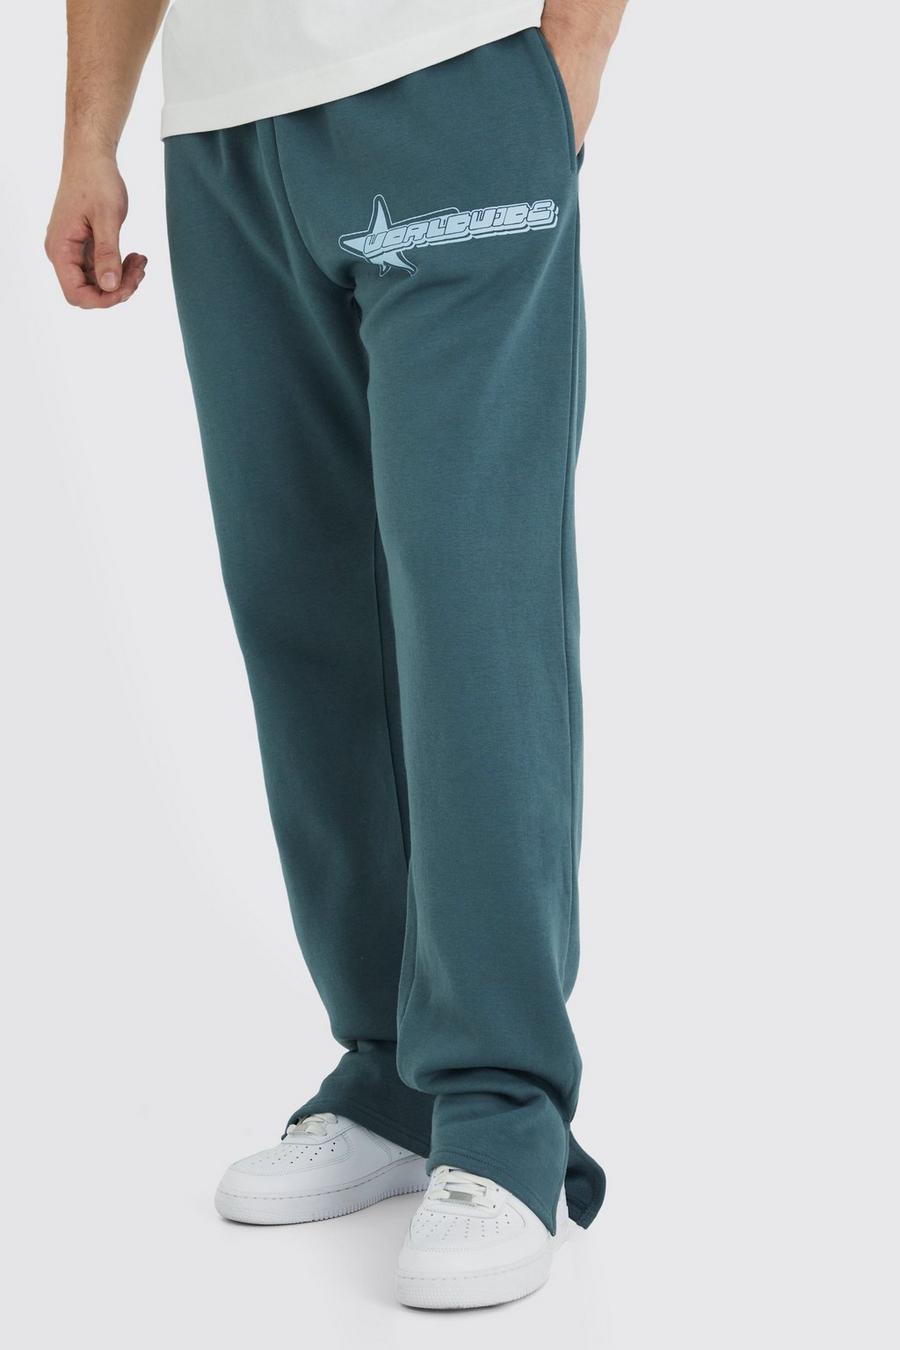 Pantaloni tuta Tall Regular Fit Worldwide con stelle e spacco sul fondo, Slate blue